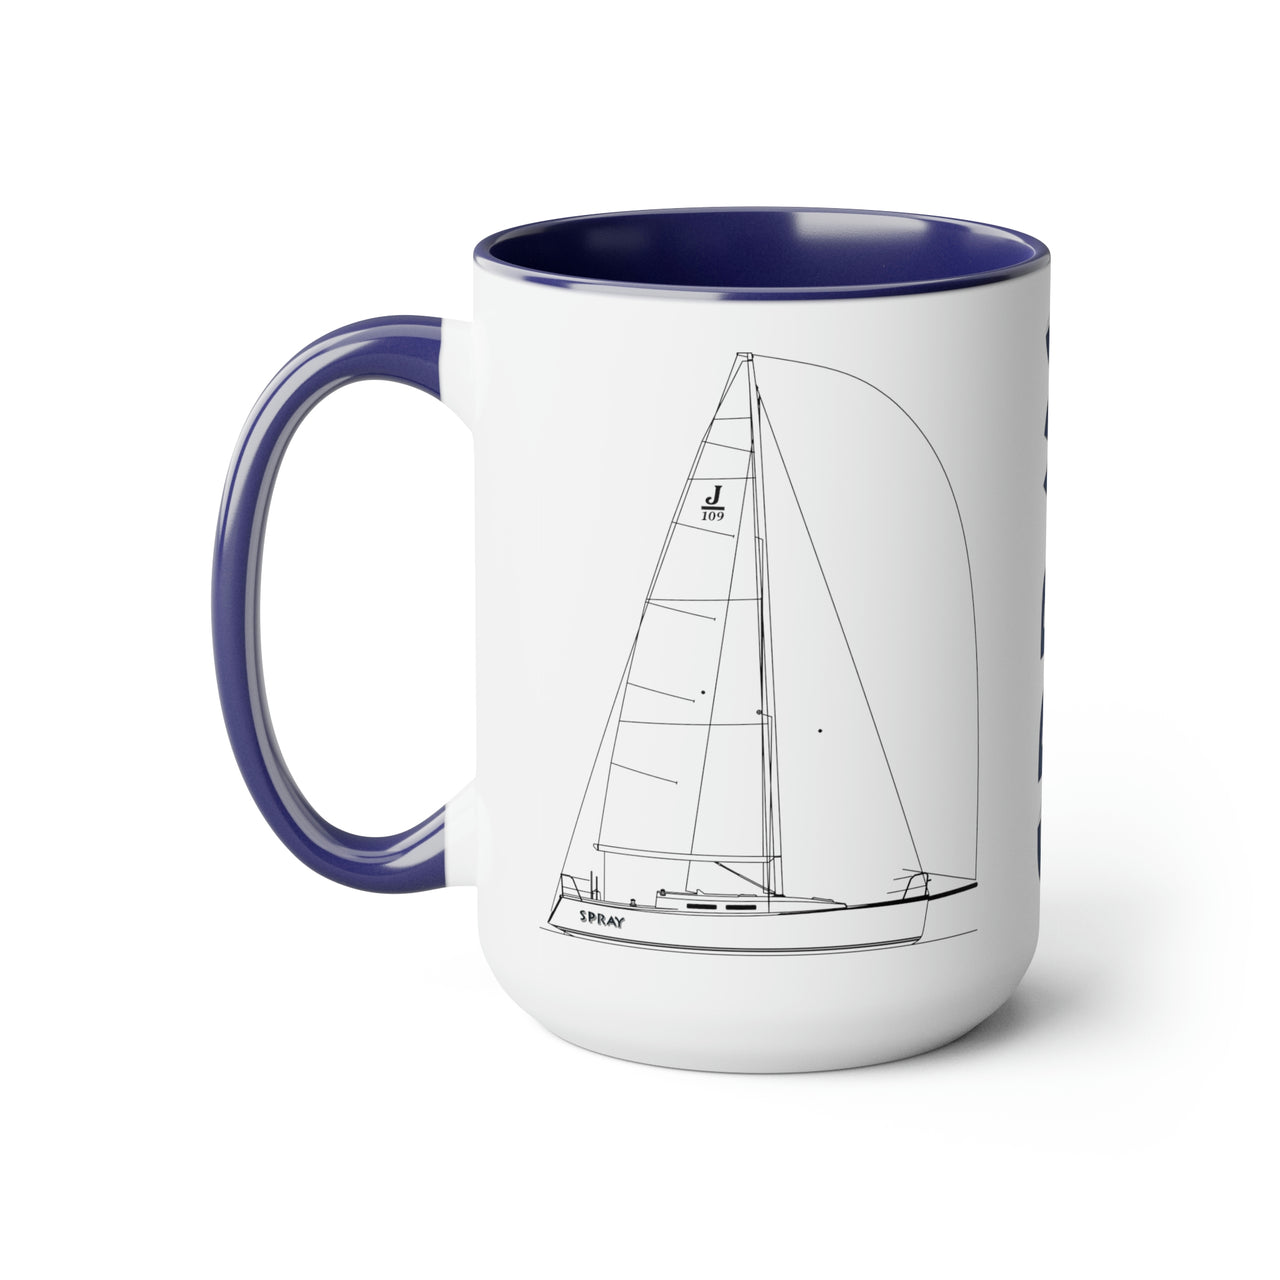 SPRAY- Two-Tone Ceramic Coffee Mug, 15oz